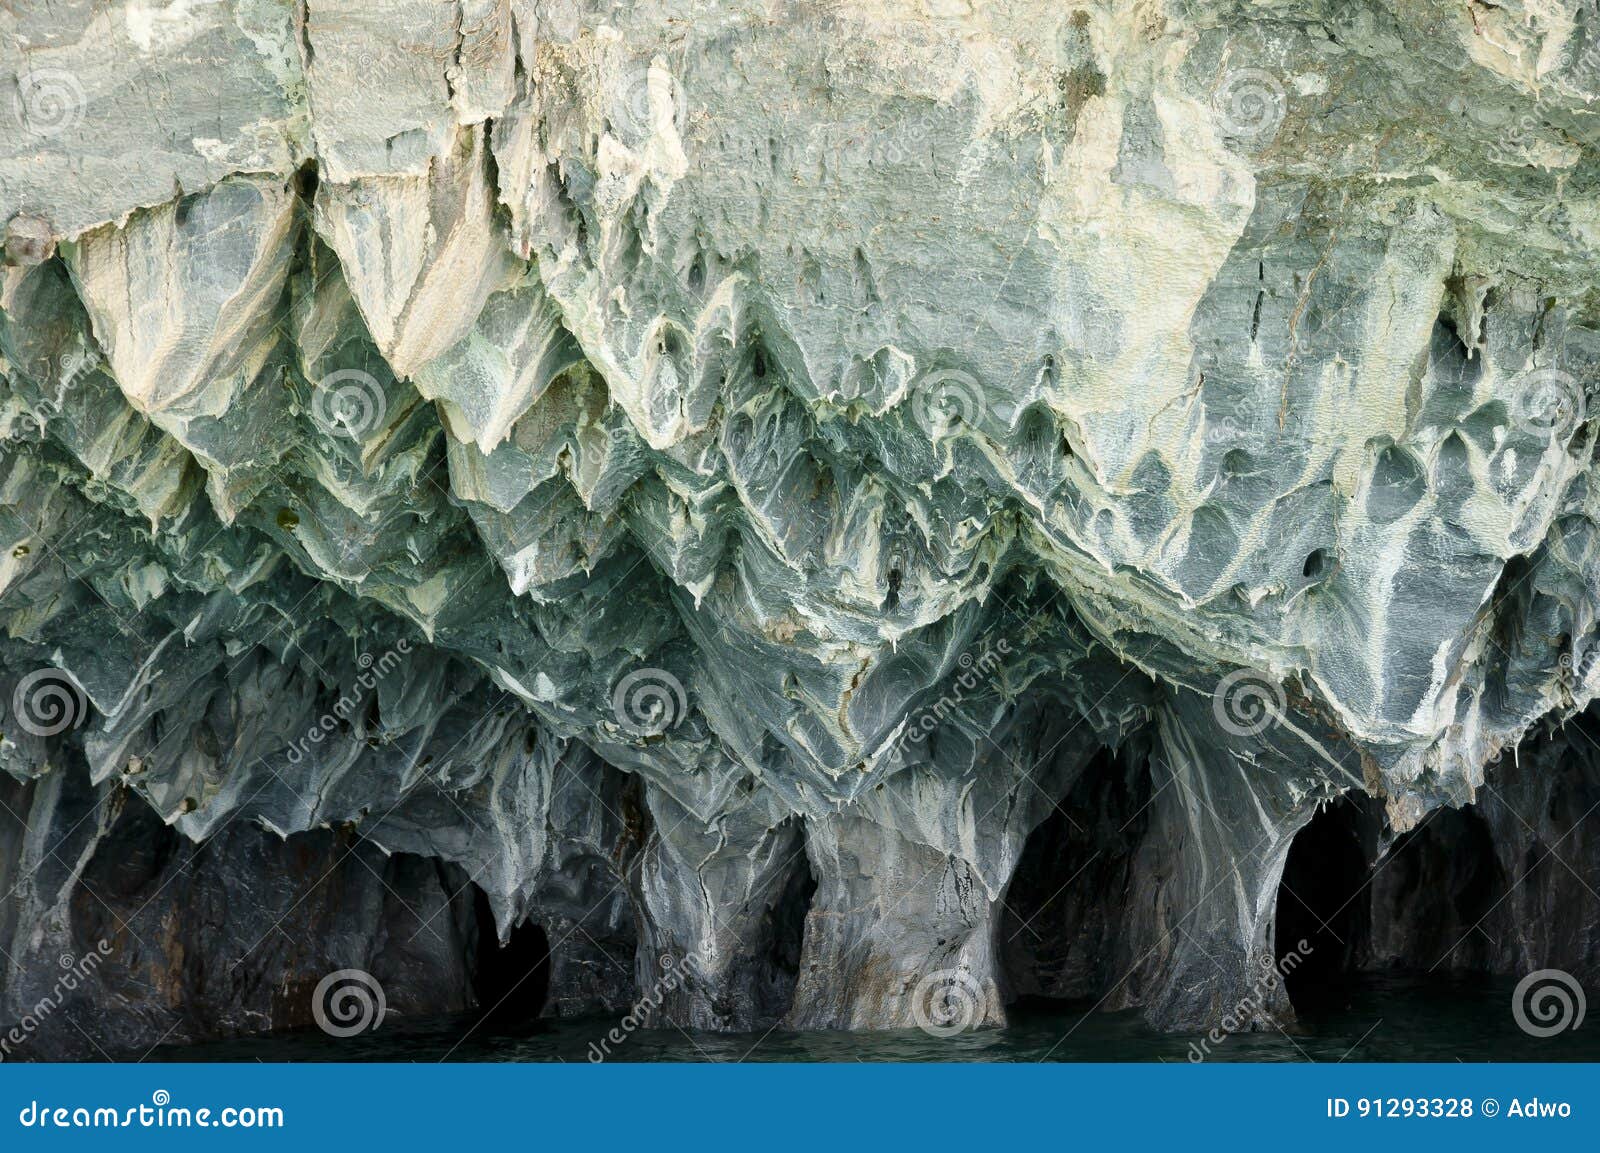 marble caves - carrera lake - chile